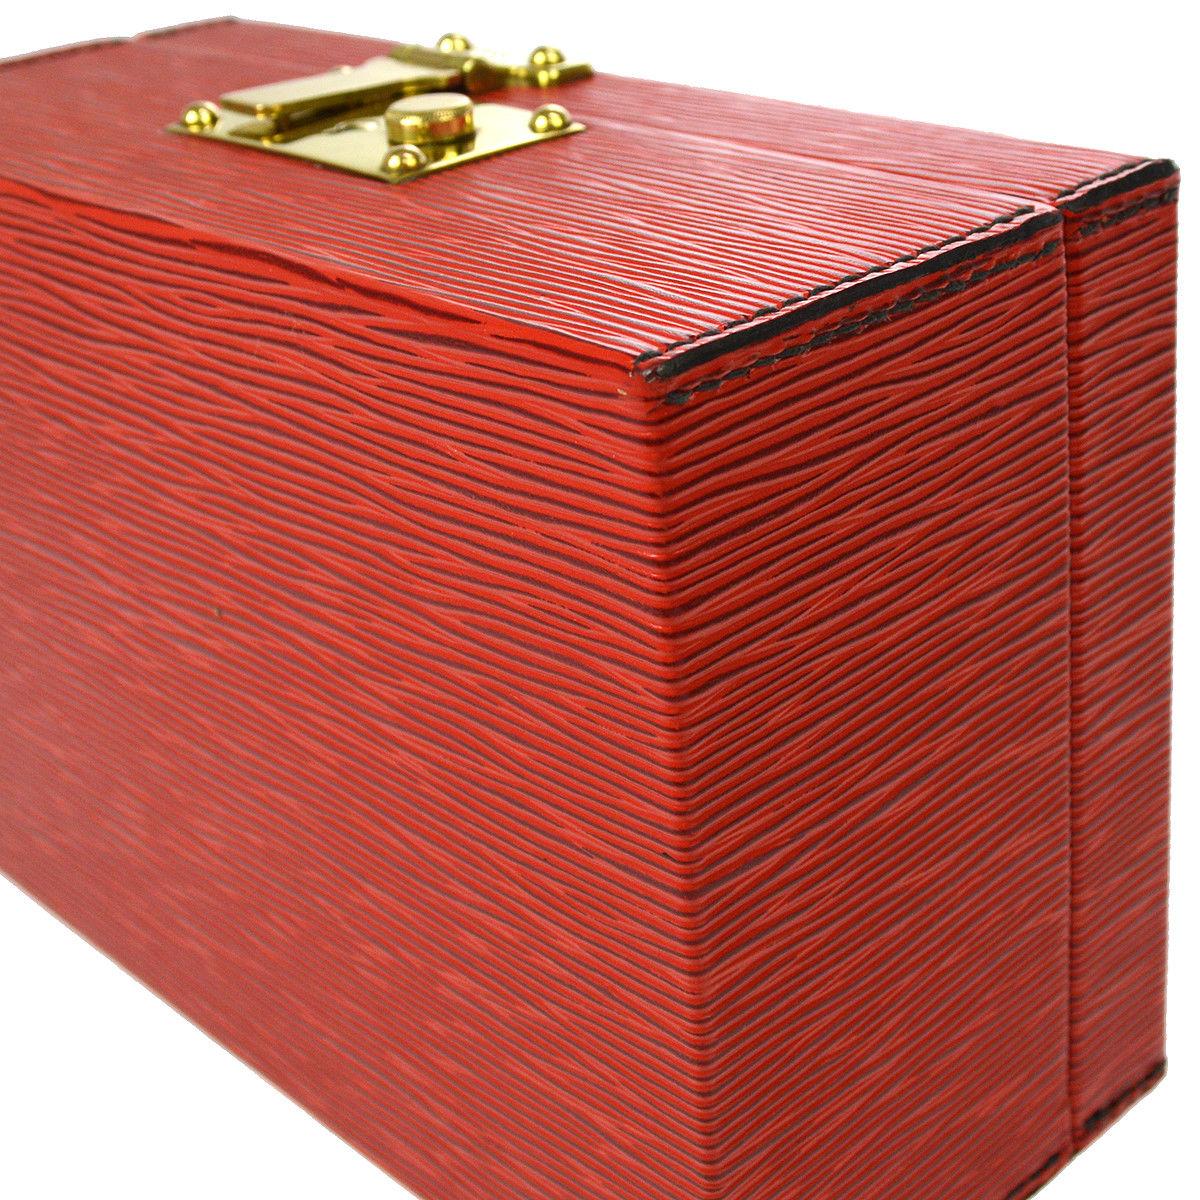 Louis Vuitton Red Leather Top Handle Satchel Vanity Cosmetic Travel Bag 1